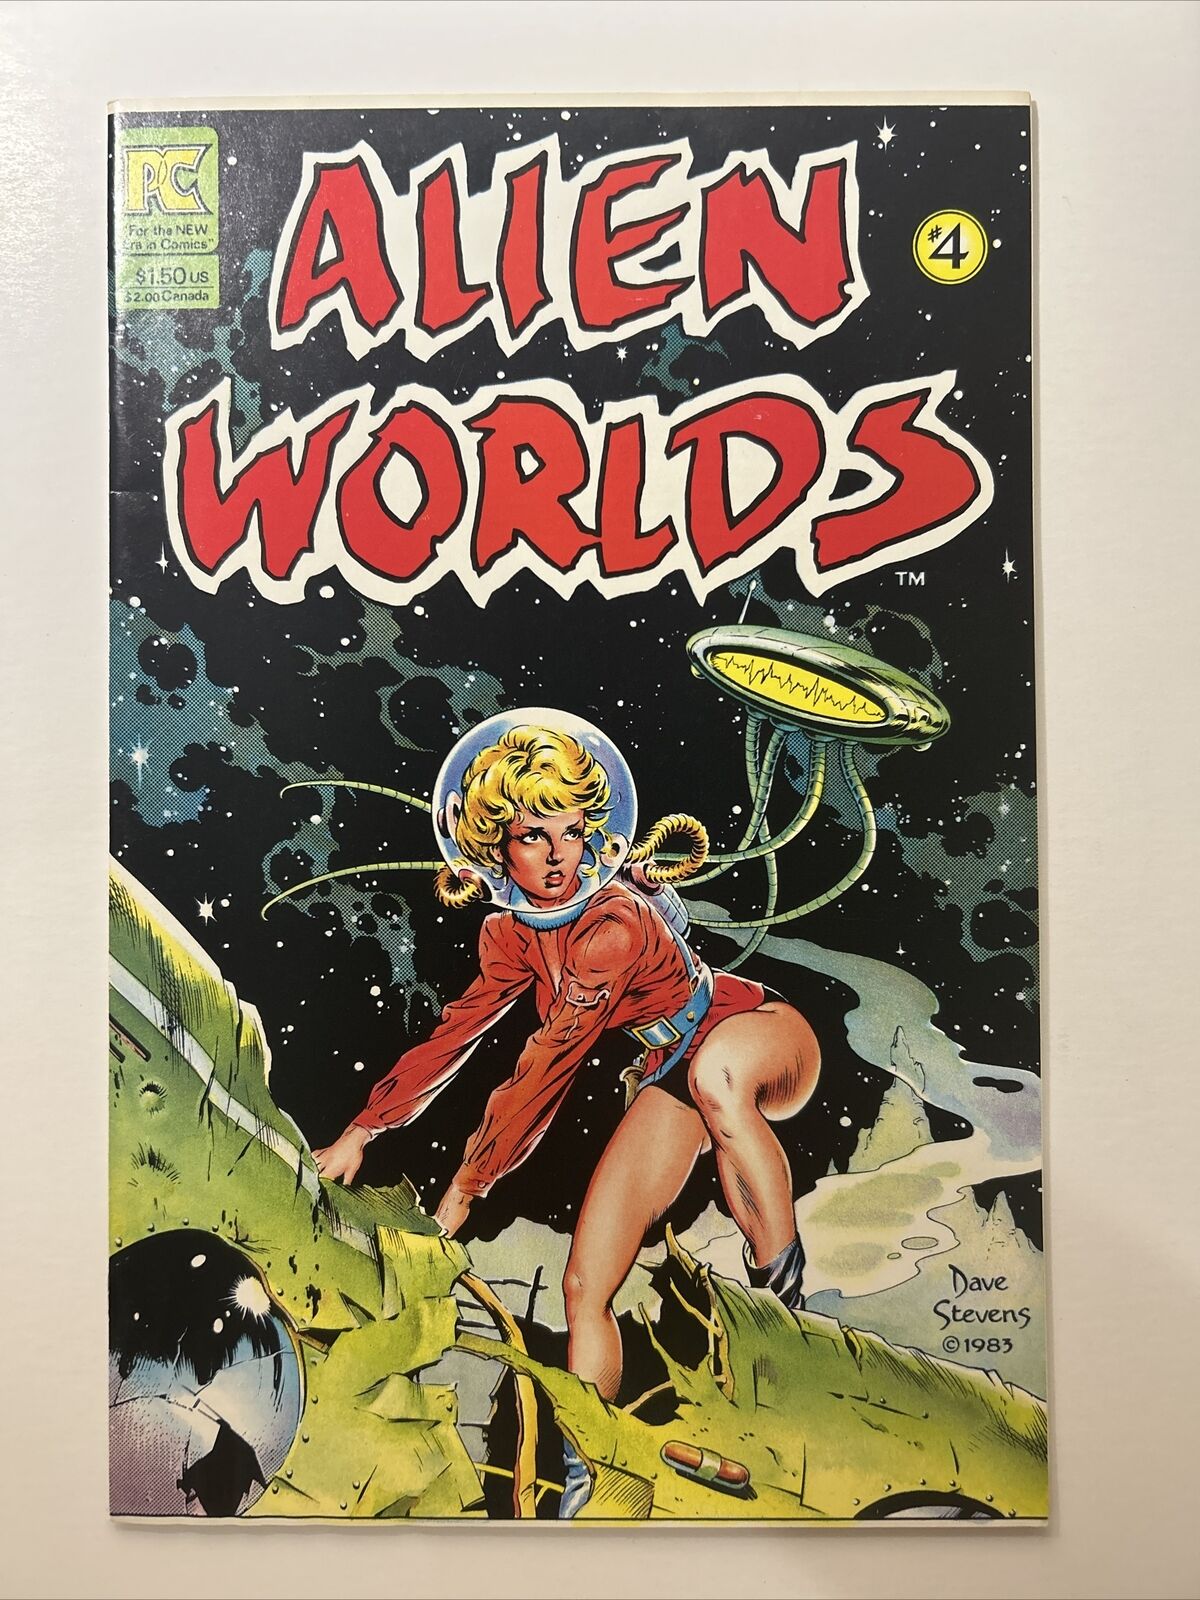 PACIFIC COMICS ALIEN WORLDS #4 DAVE STEVENS COVER & INTERIER ART 1982